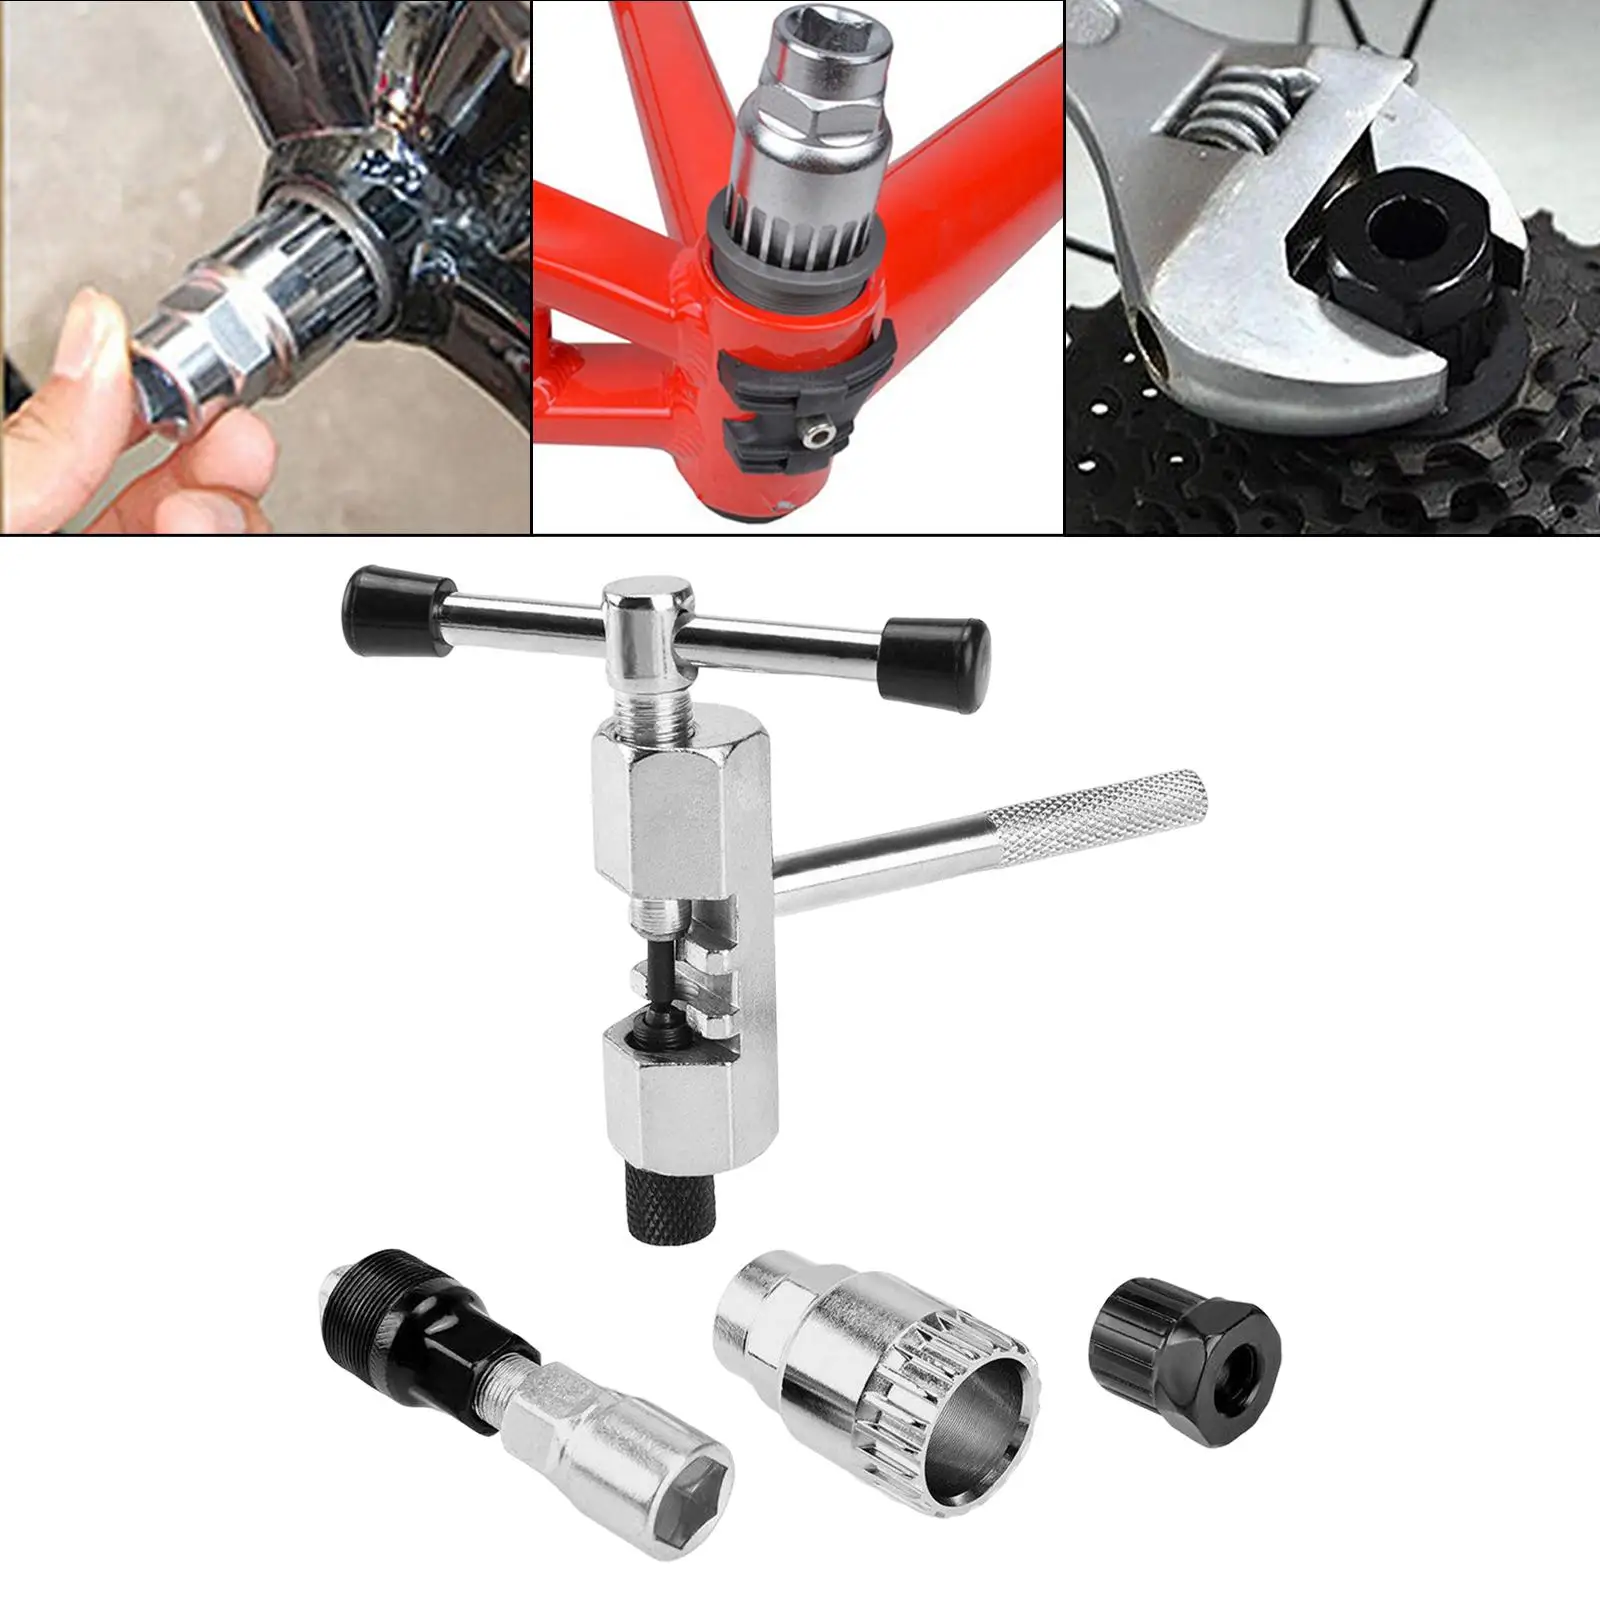 4x Crank Arm Puller Freewheel Kit Chain Bottom Bracket Tool for Bicycle Outdoor MTB Road BMX Bike